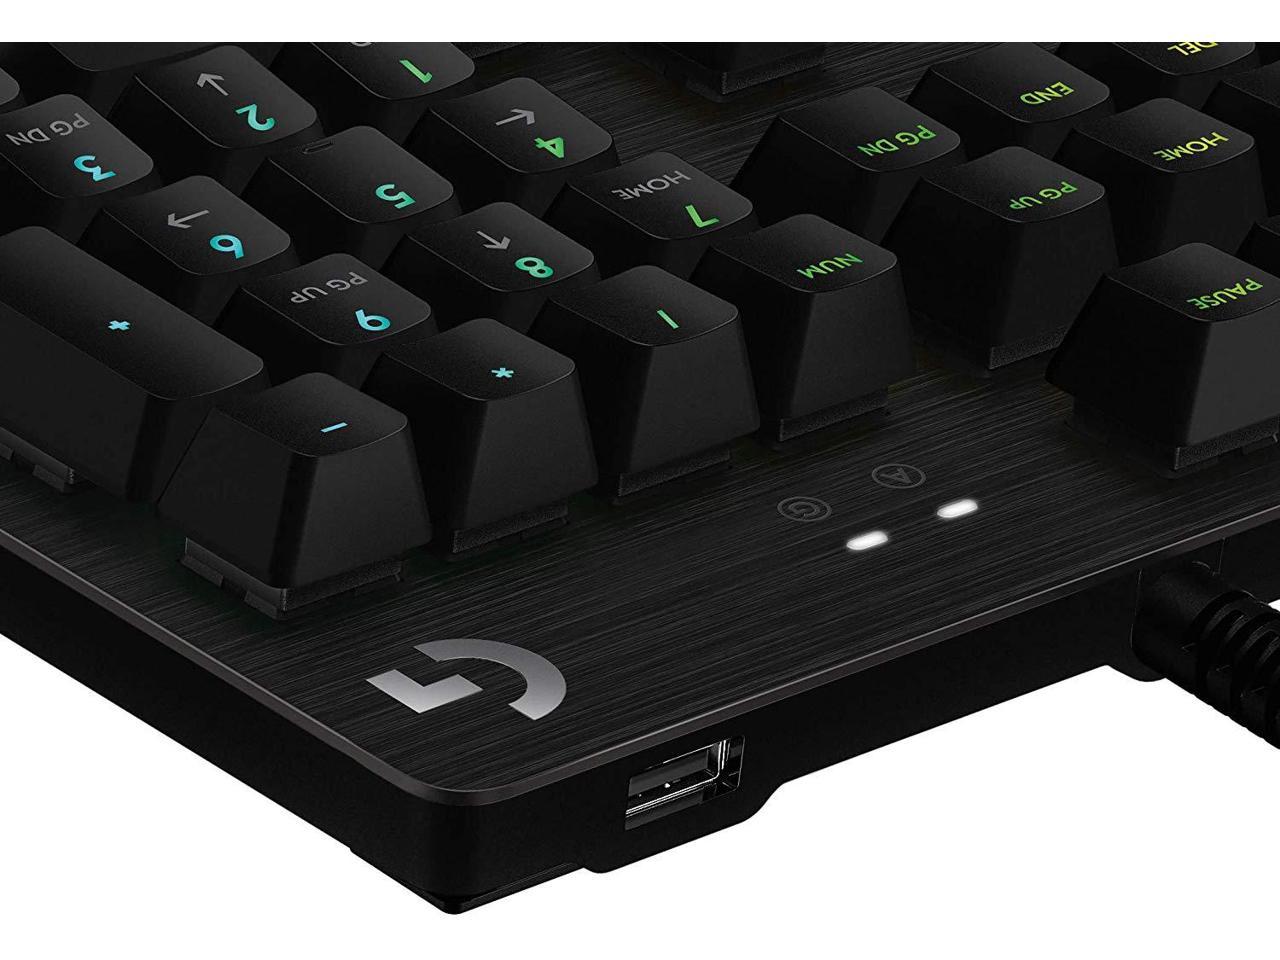 Logitech G512 SE Lightsync RGB Mechanical Gaming Keyboard with USB Passthrough